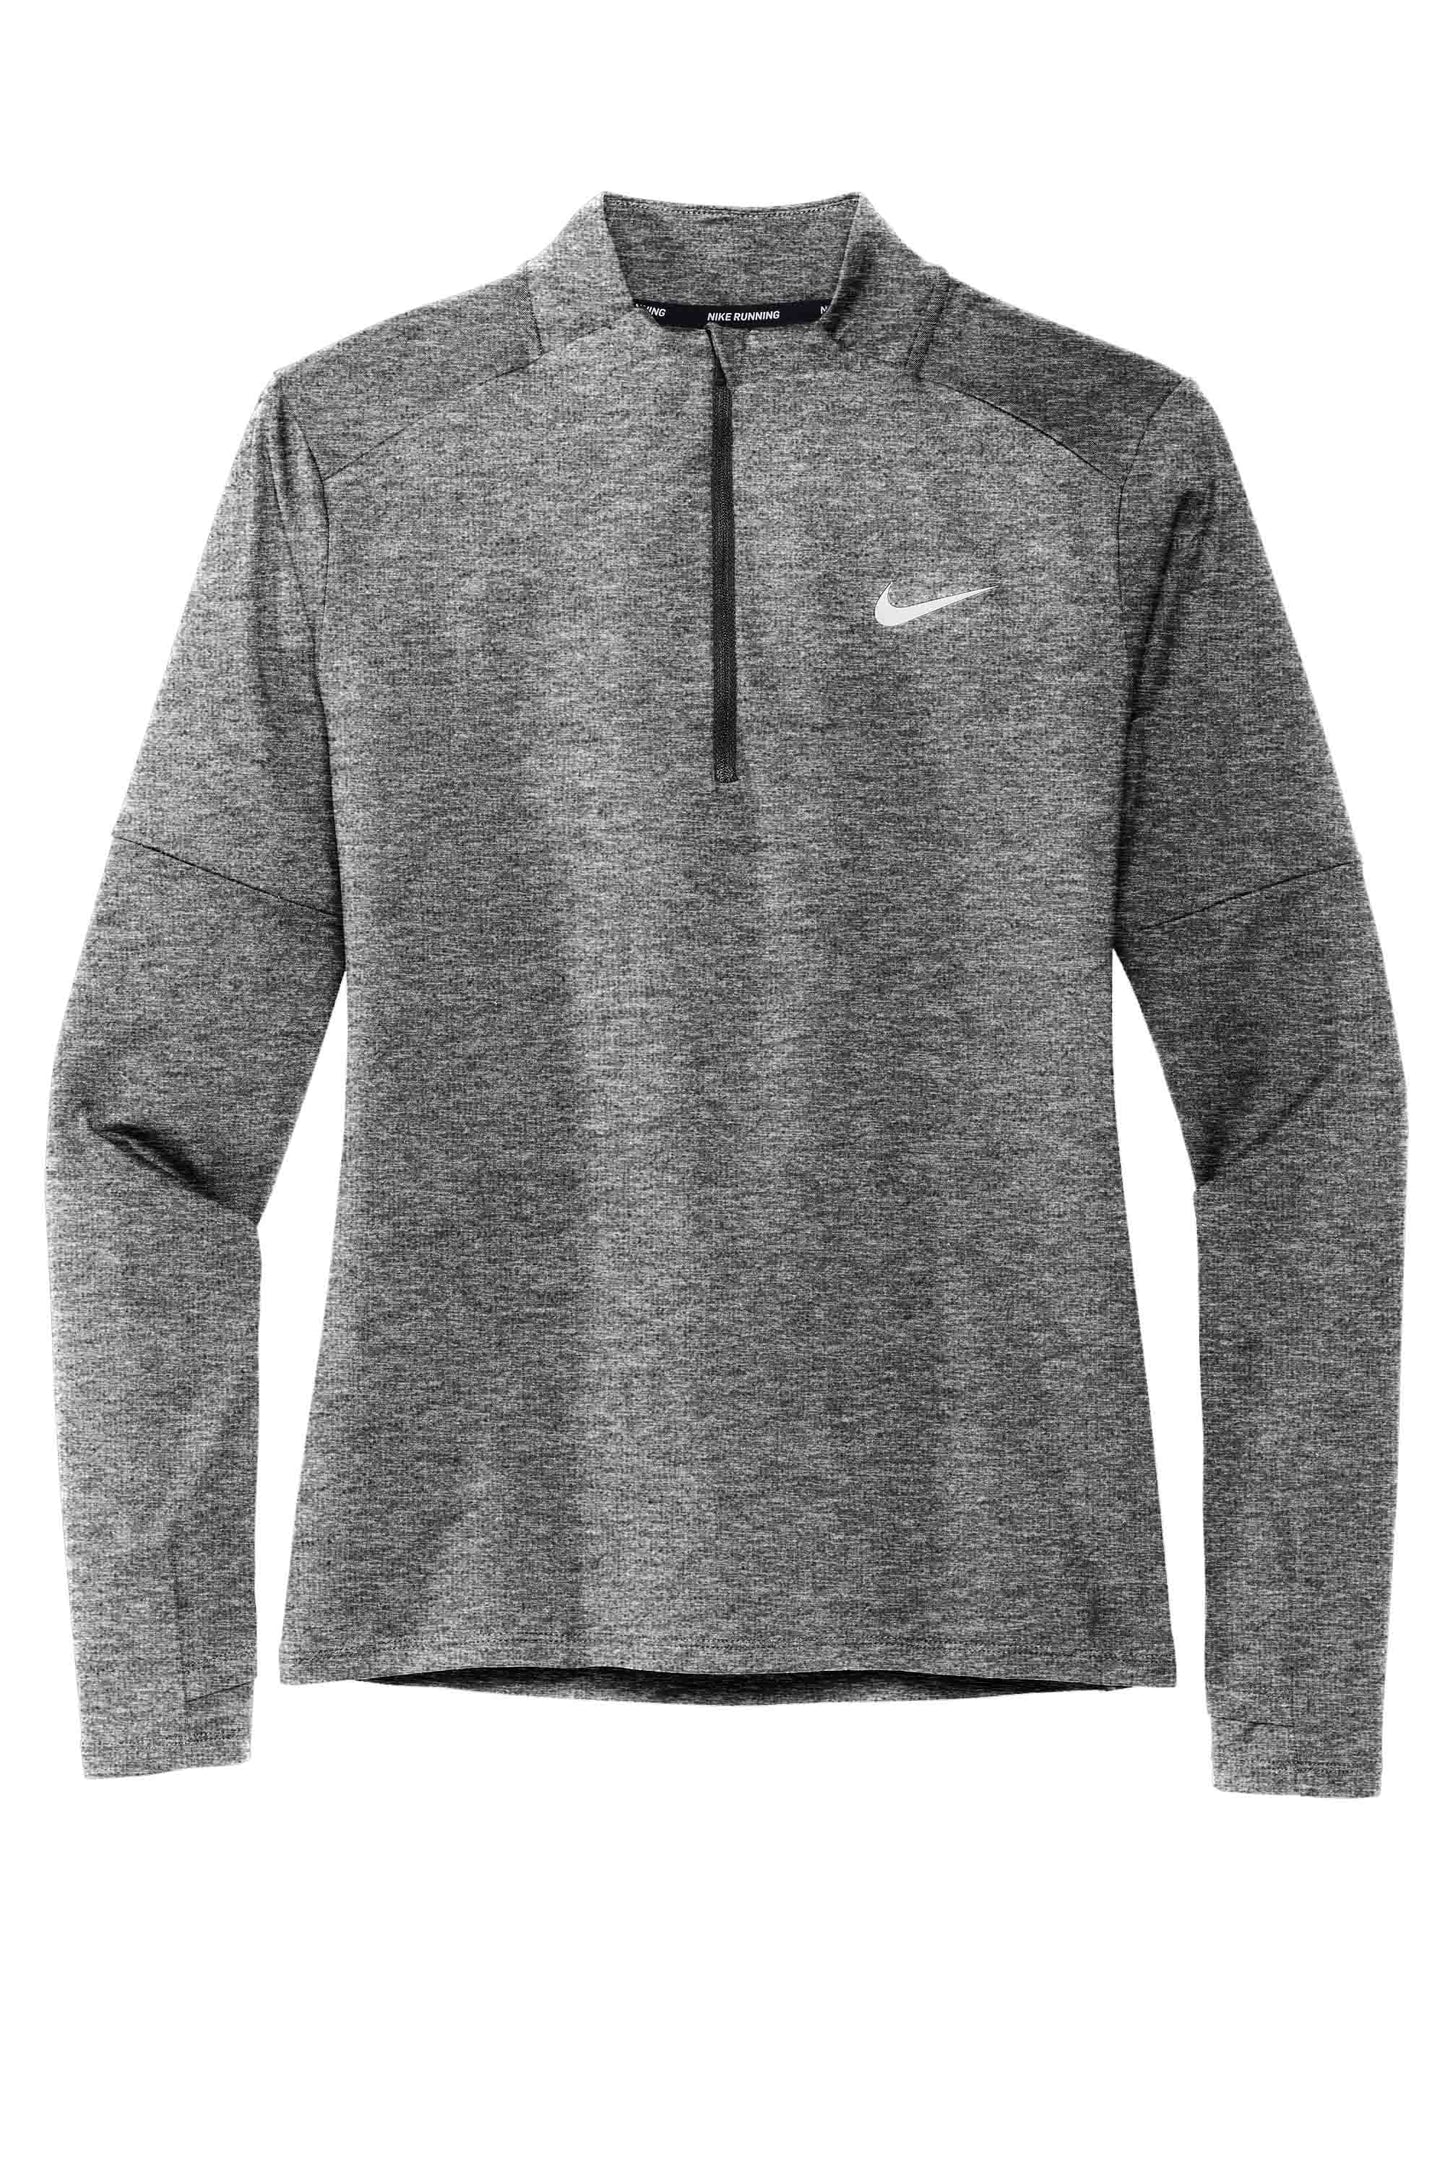 Nike Ladies Dri-FIT Lightweight 1/2 Zip Pullover